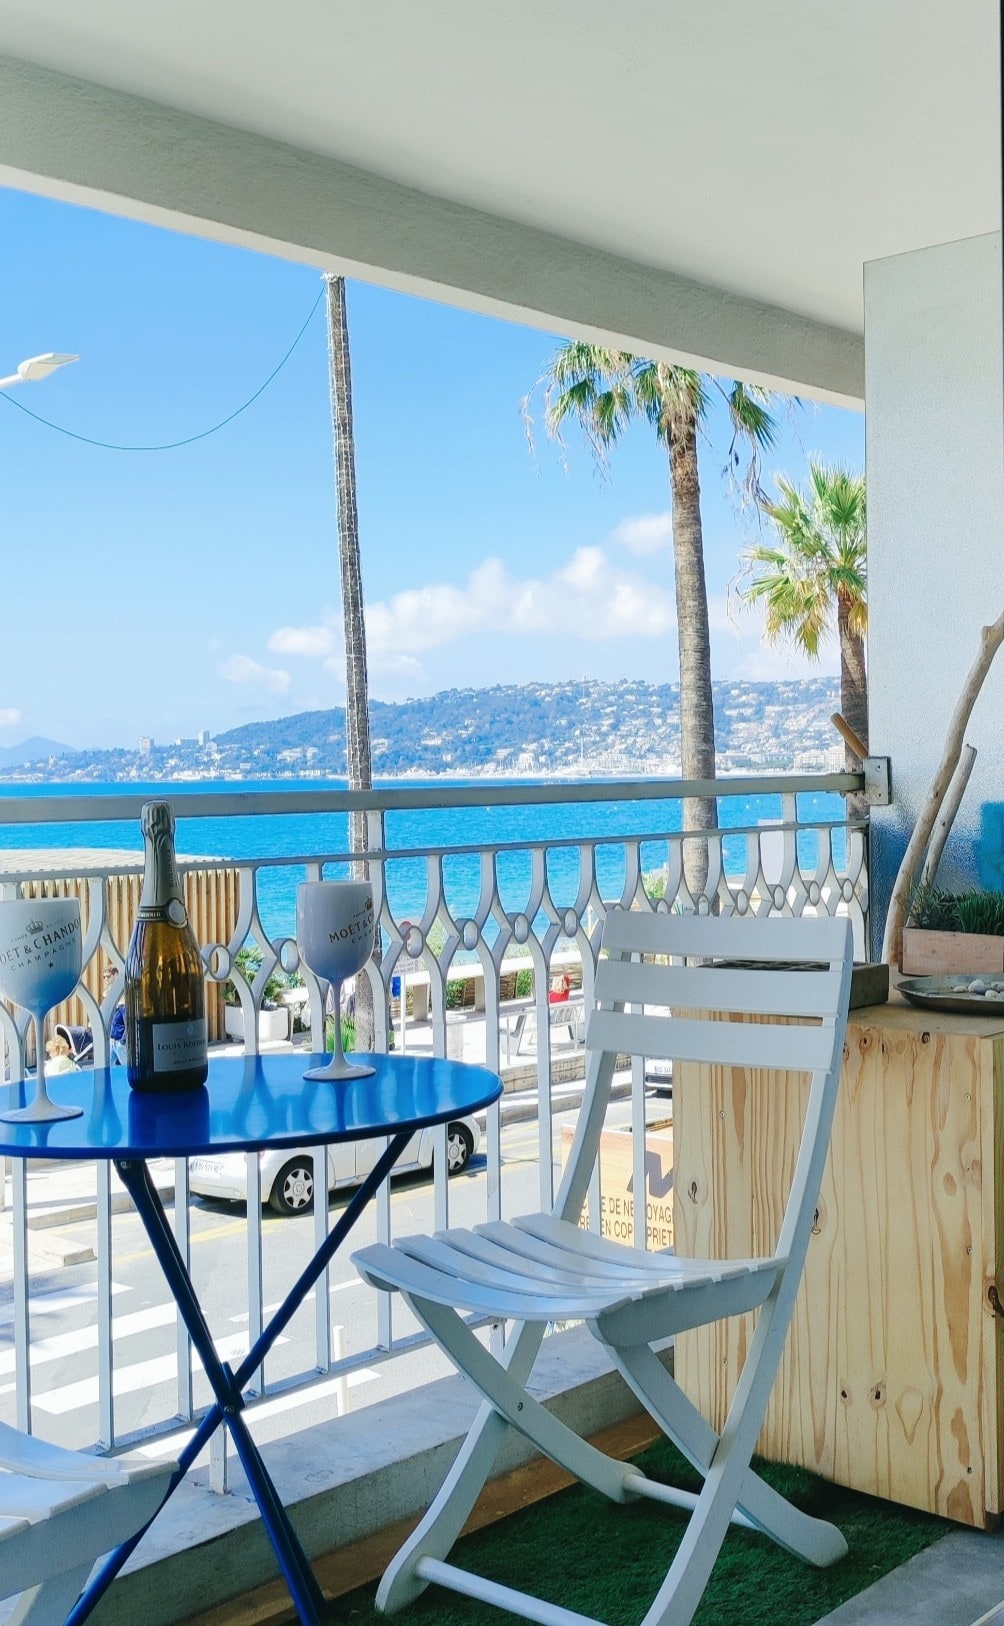 Juan-les-Pins, Antibes Vacation Rentals & Homes - Antibes, France | Airbnb